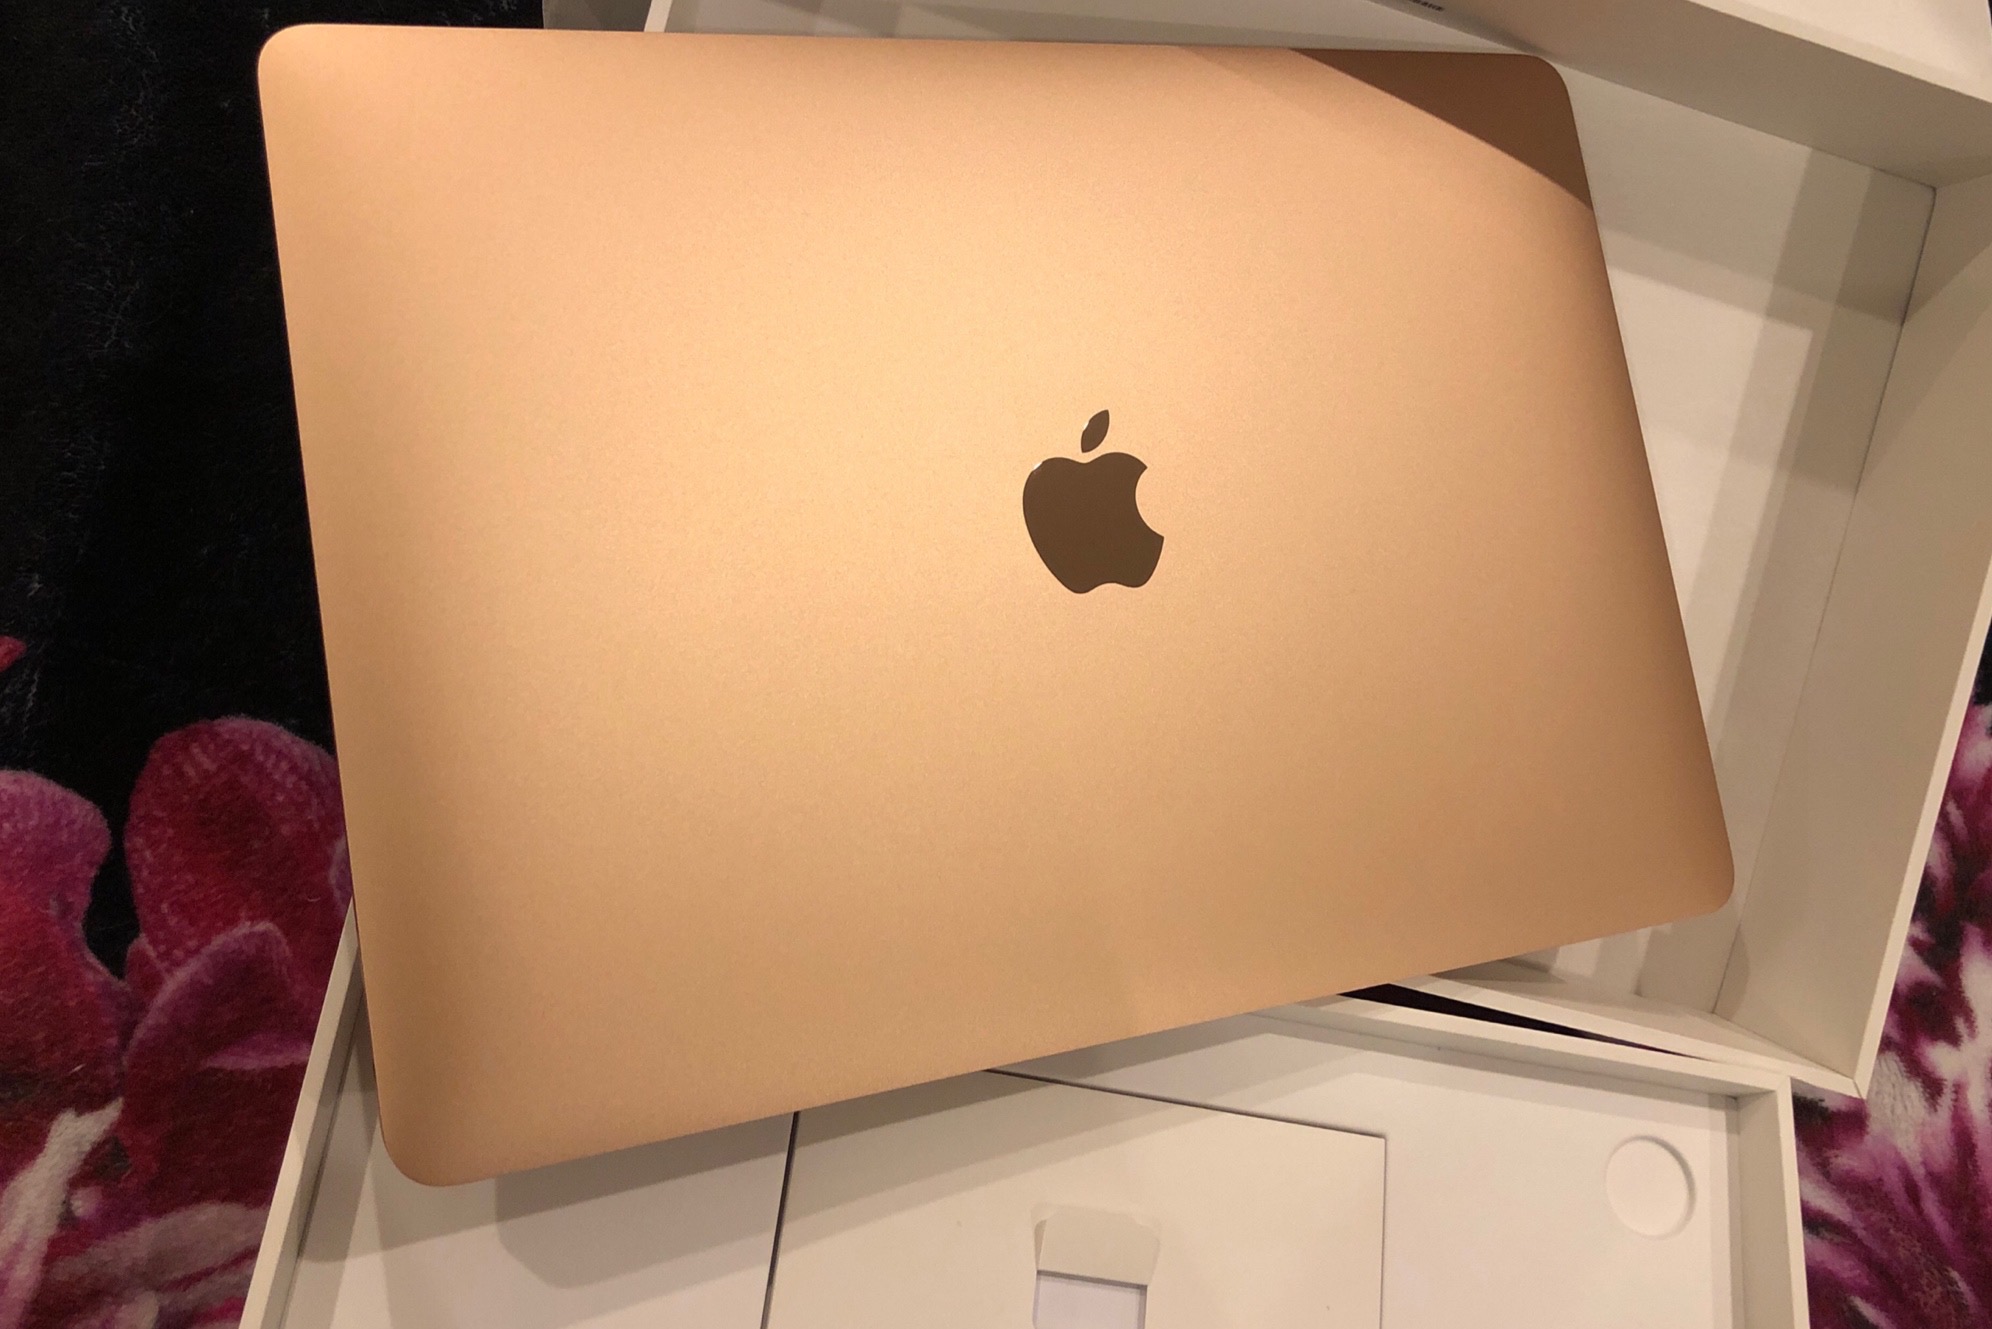 Macbookairのピンクをゲットしてきた件 Apple社のブランド力